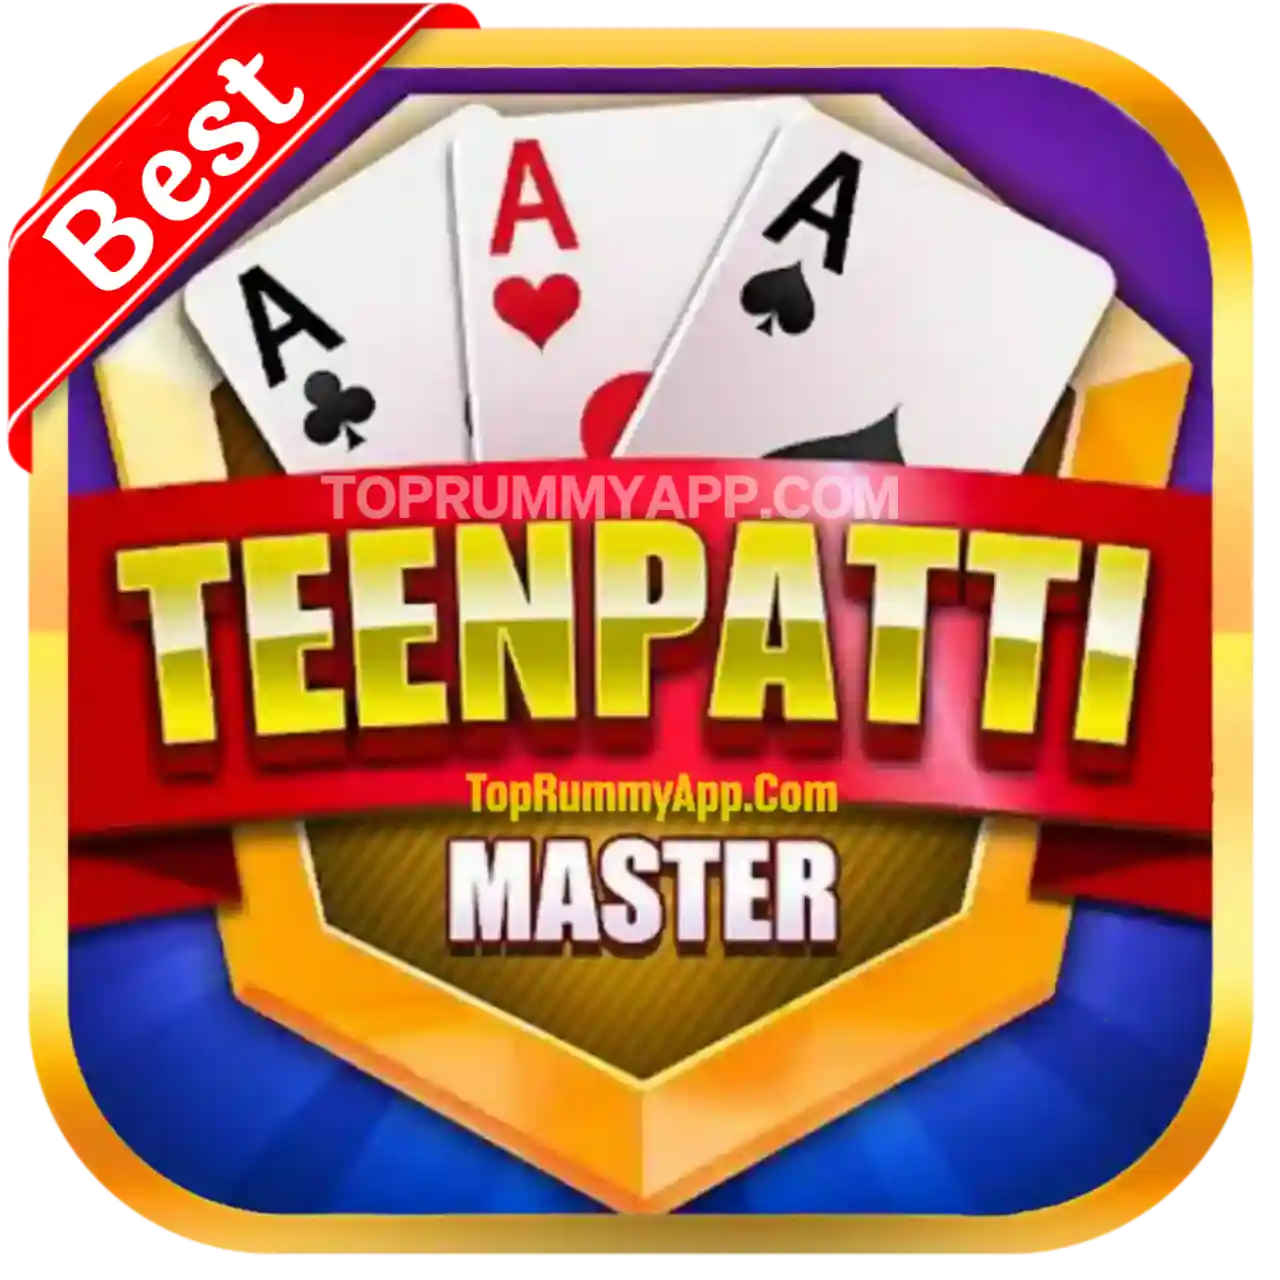 Teen Patti Master Apk Download - Teen Patti Rich Apk Download